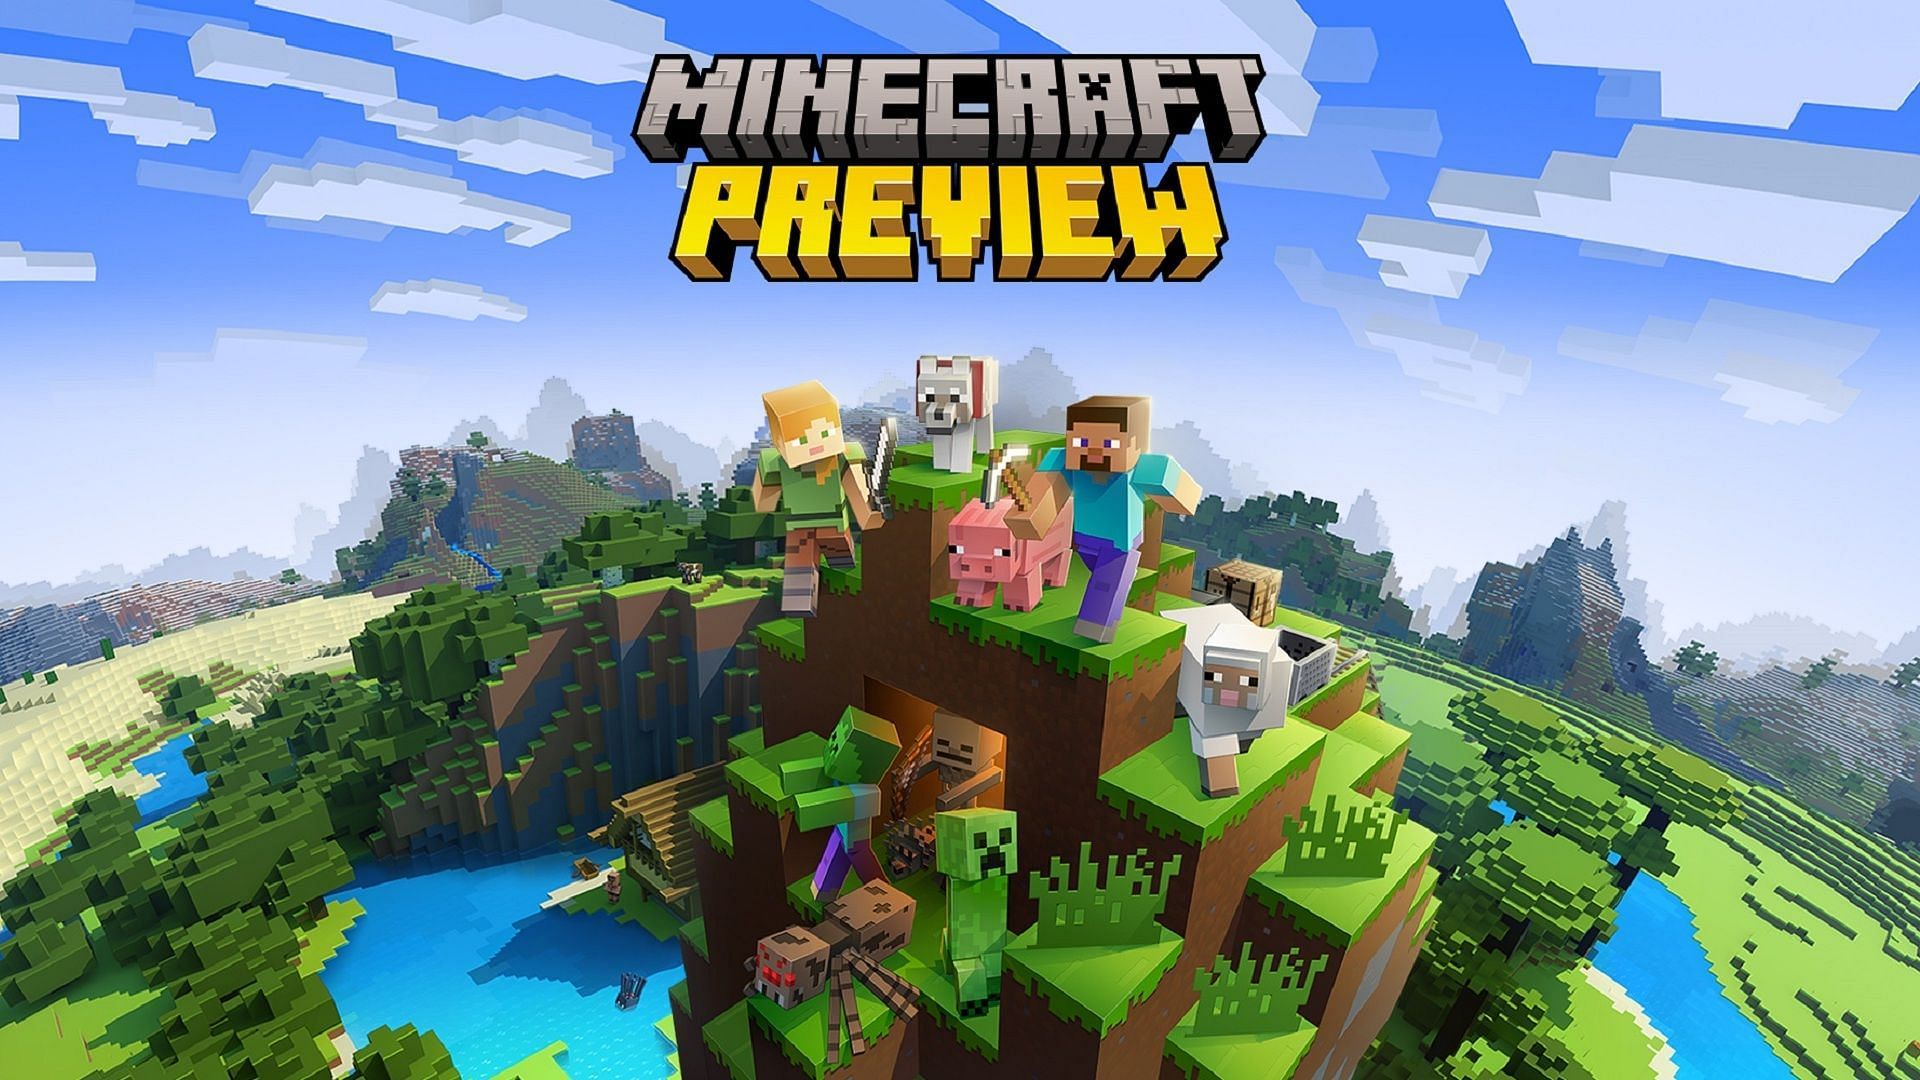 Minecraft Preview a sa propre application sur les consoles Xbox (Image via Mojang)